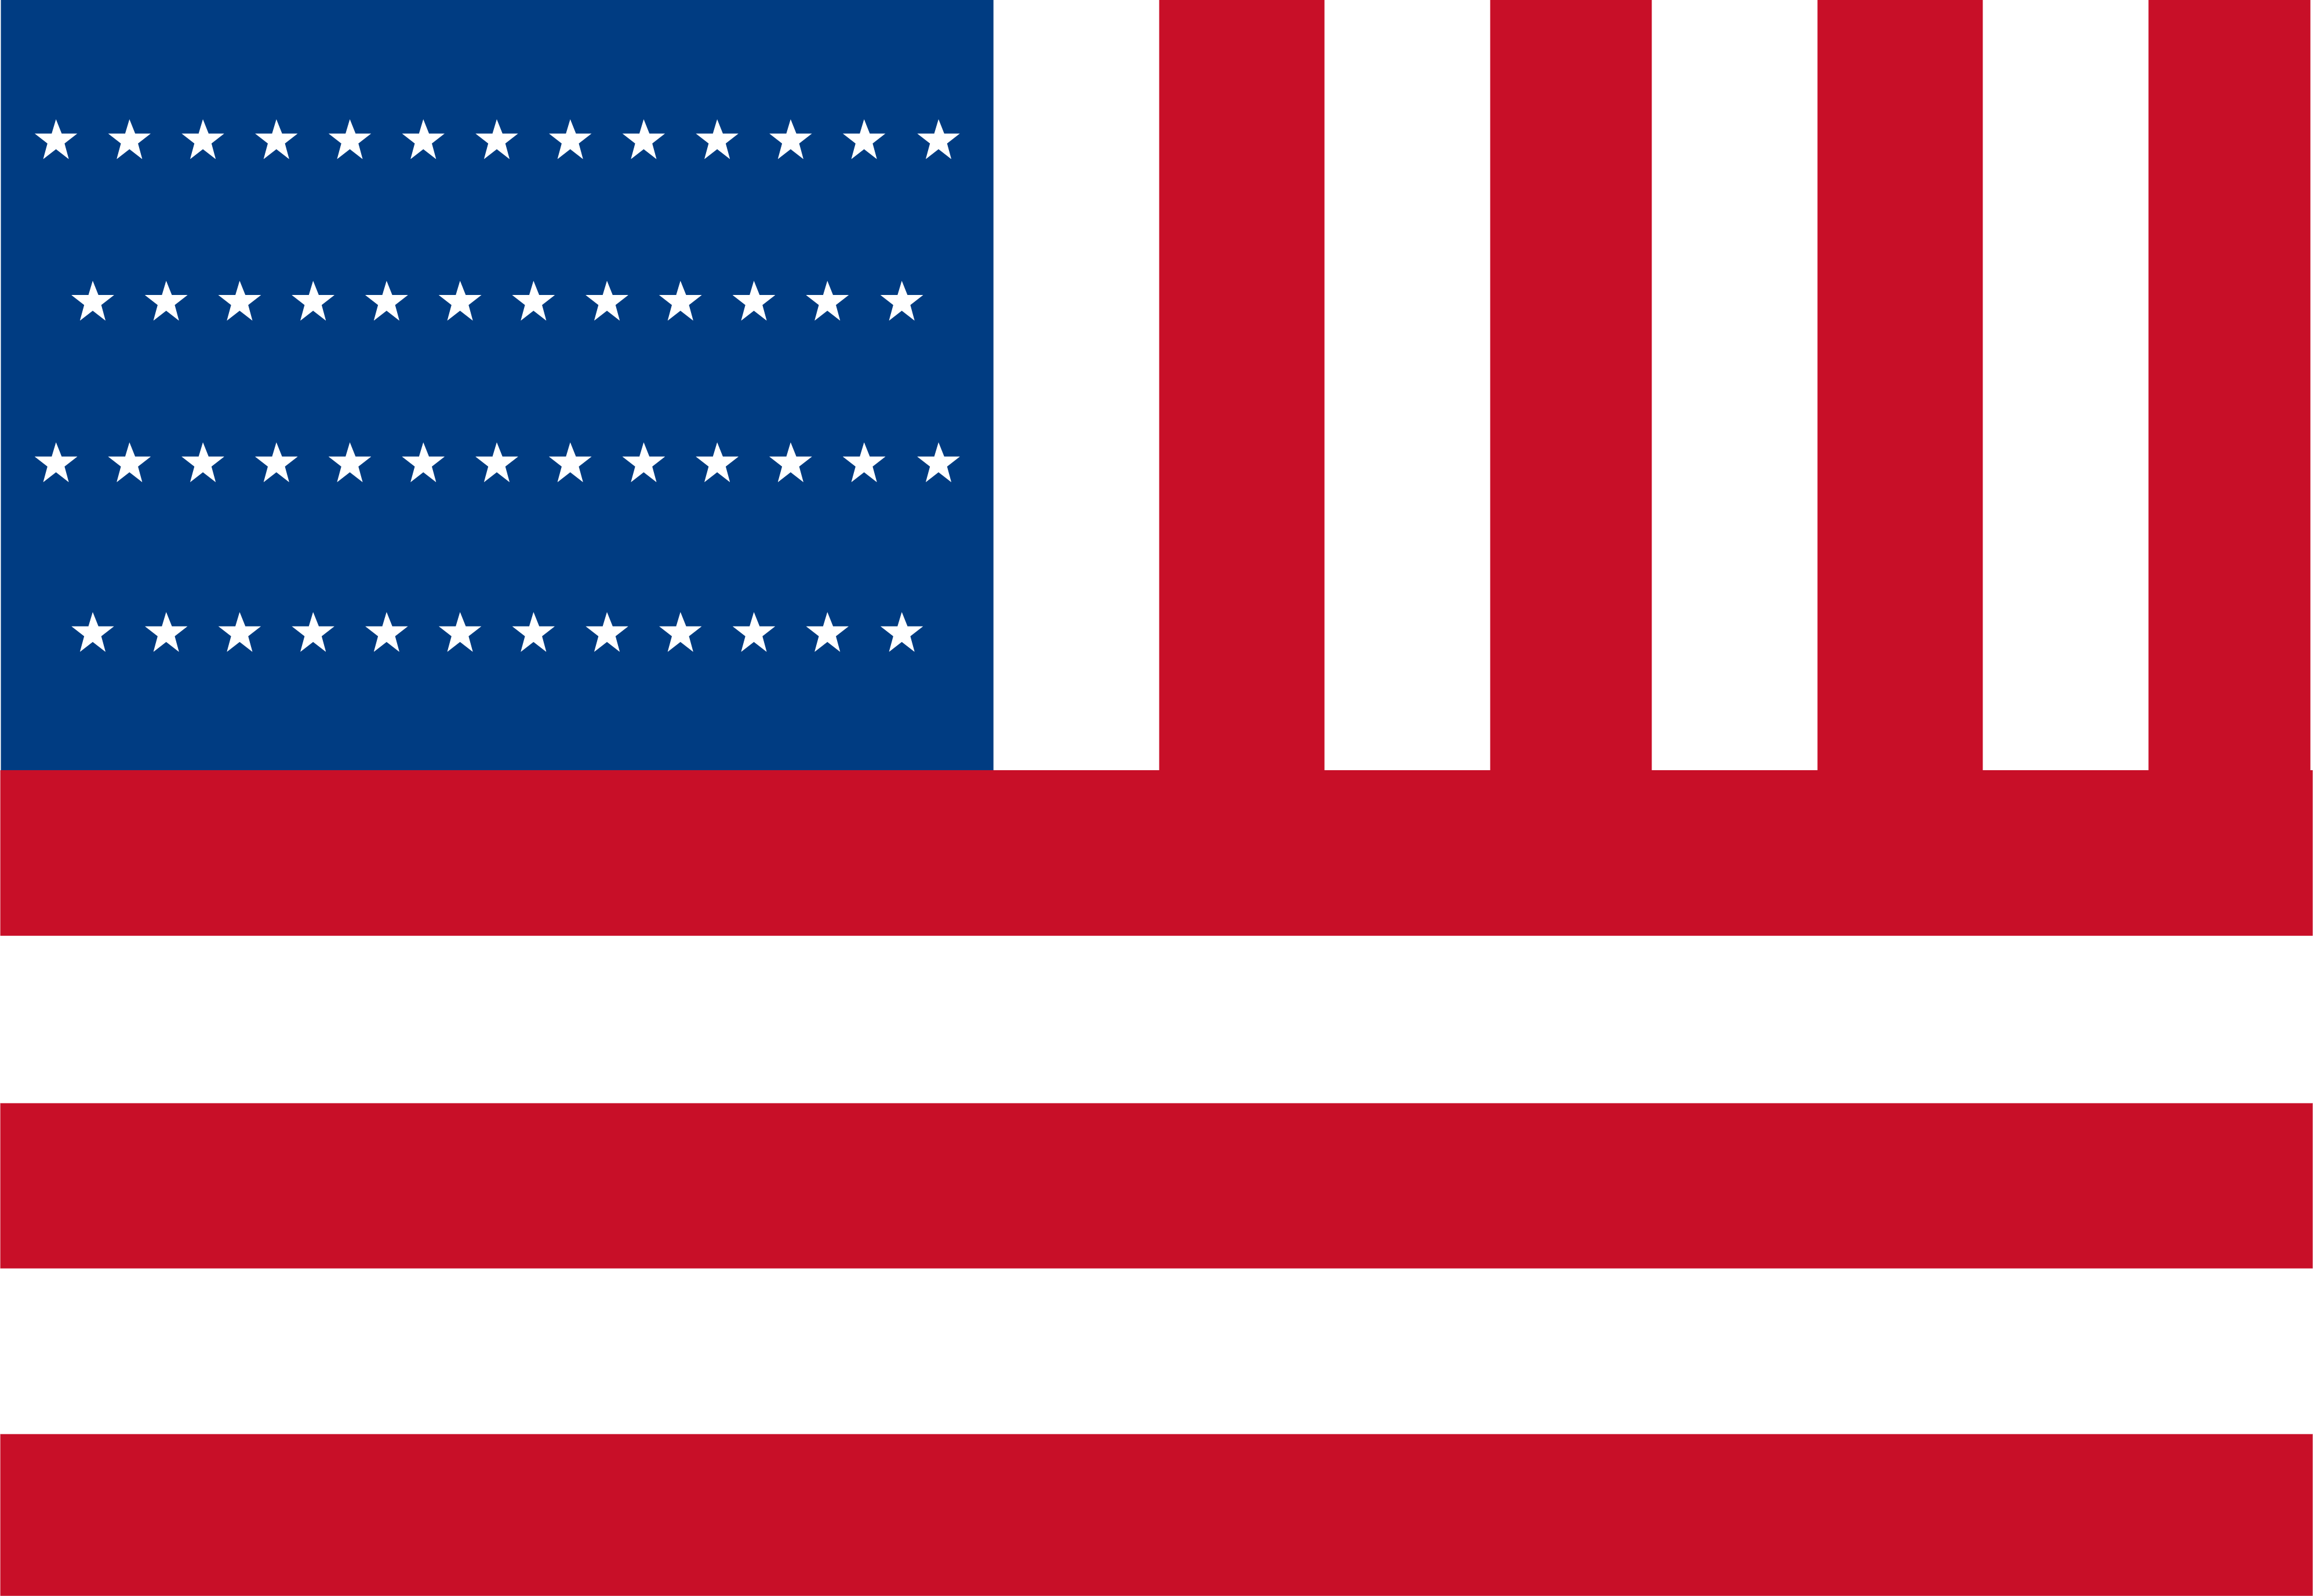 Bank of America Flag Logo - The American Flag per the Bank of America logo